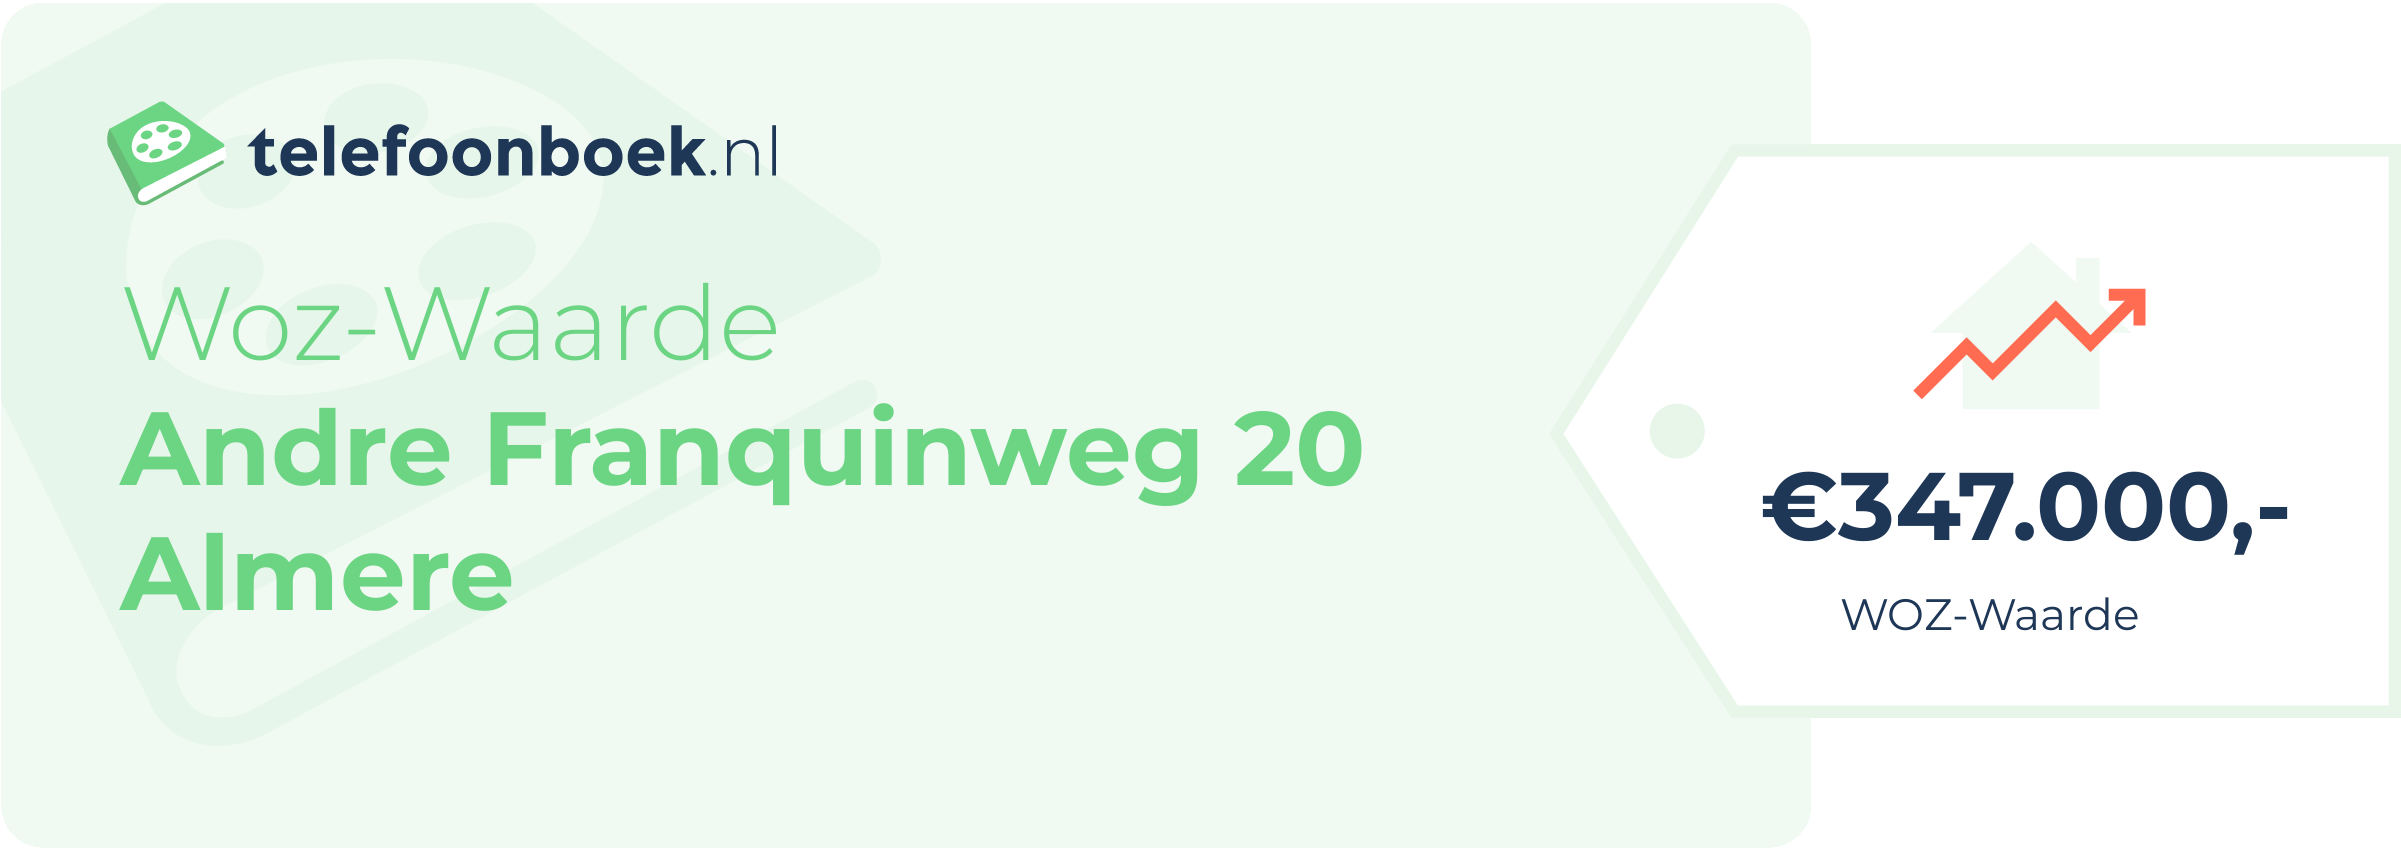 WOZ-waarde Andre Franquinweg 20 Almere